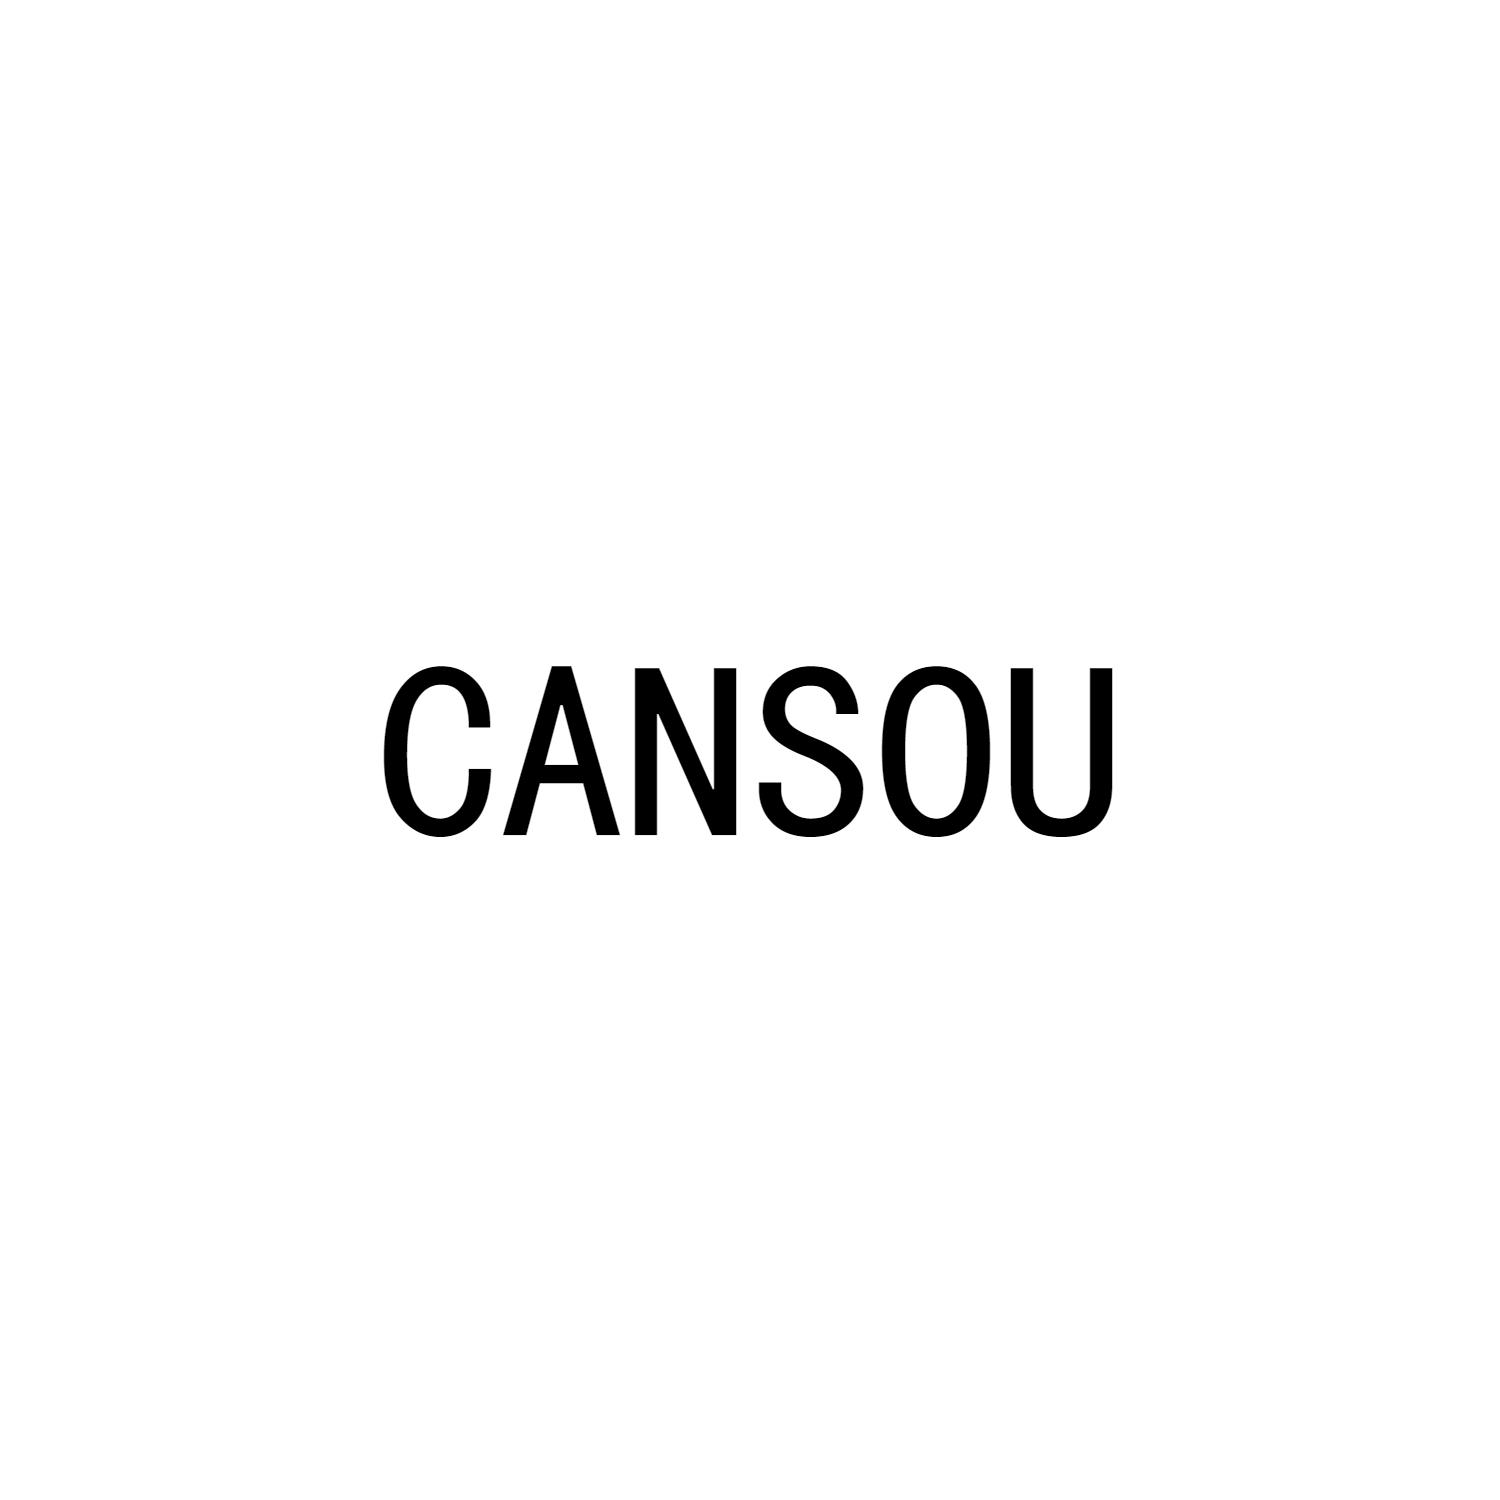 CANSOU